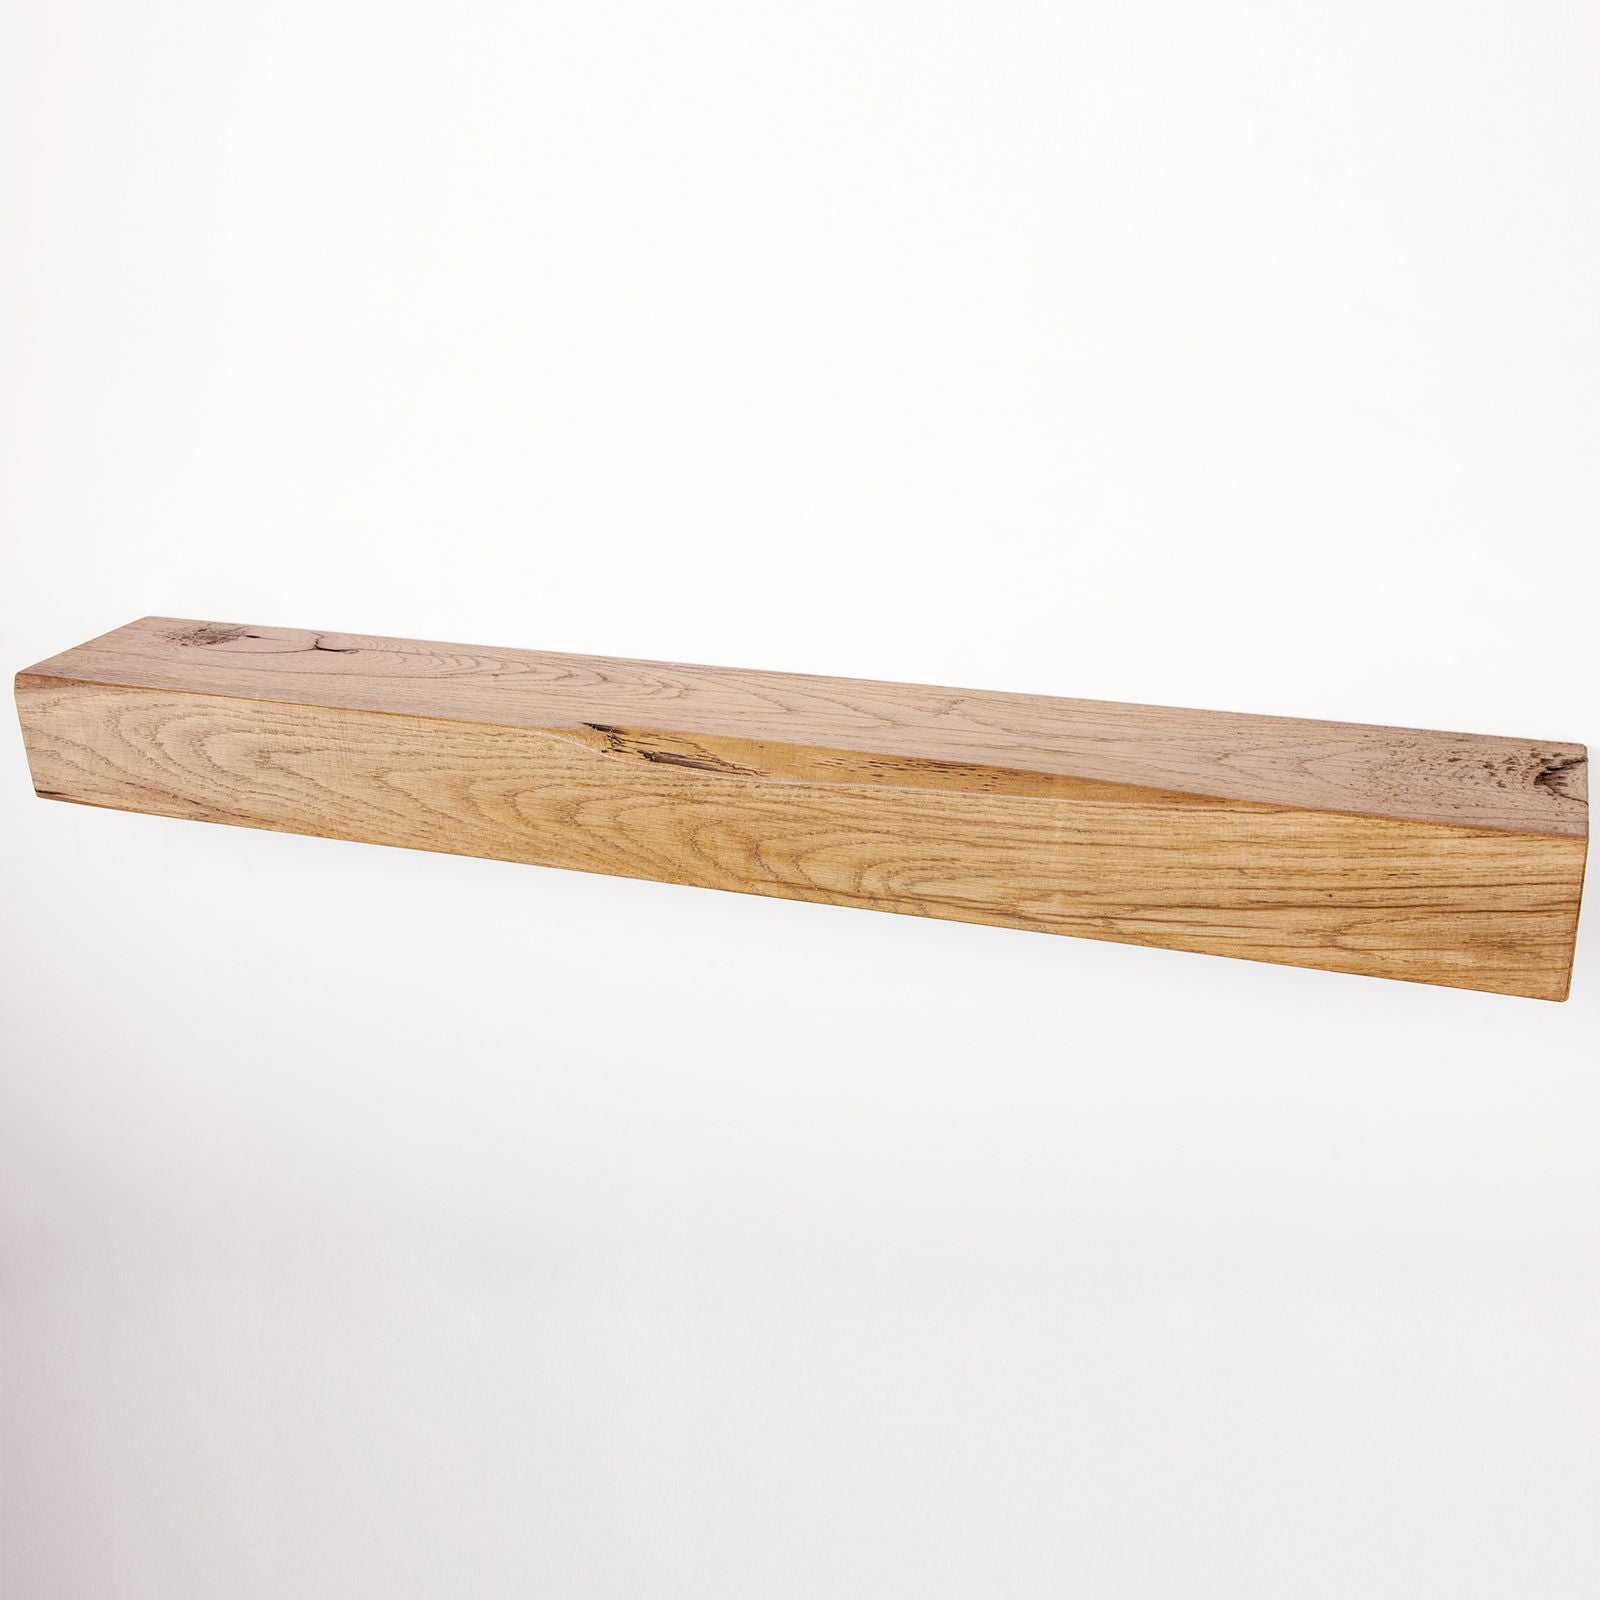 6x4 Oak Floating Shelf (14x9cm)